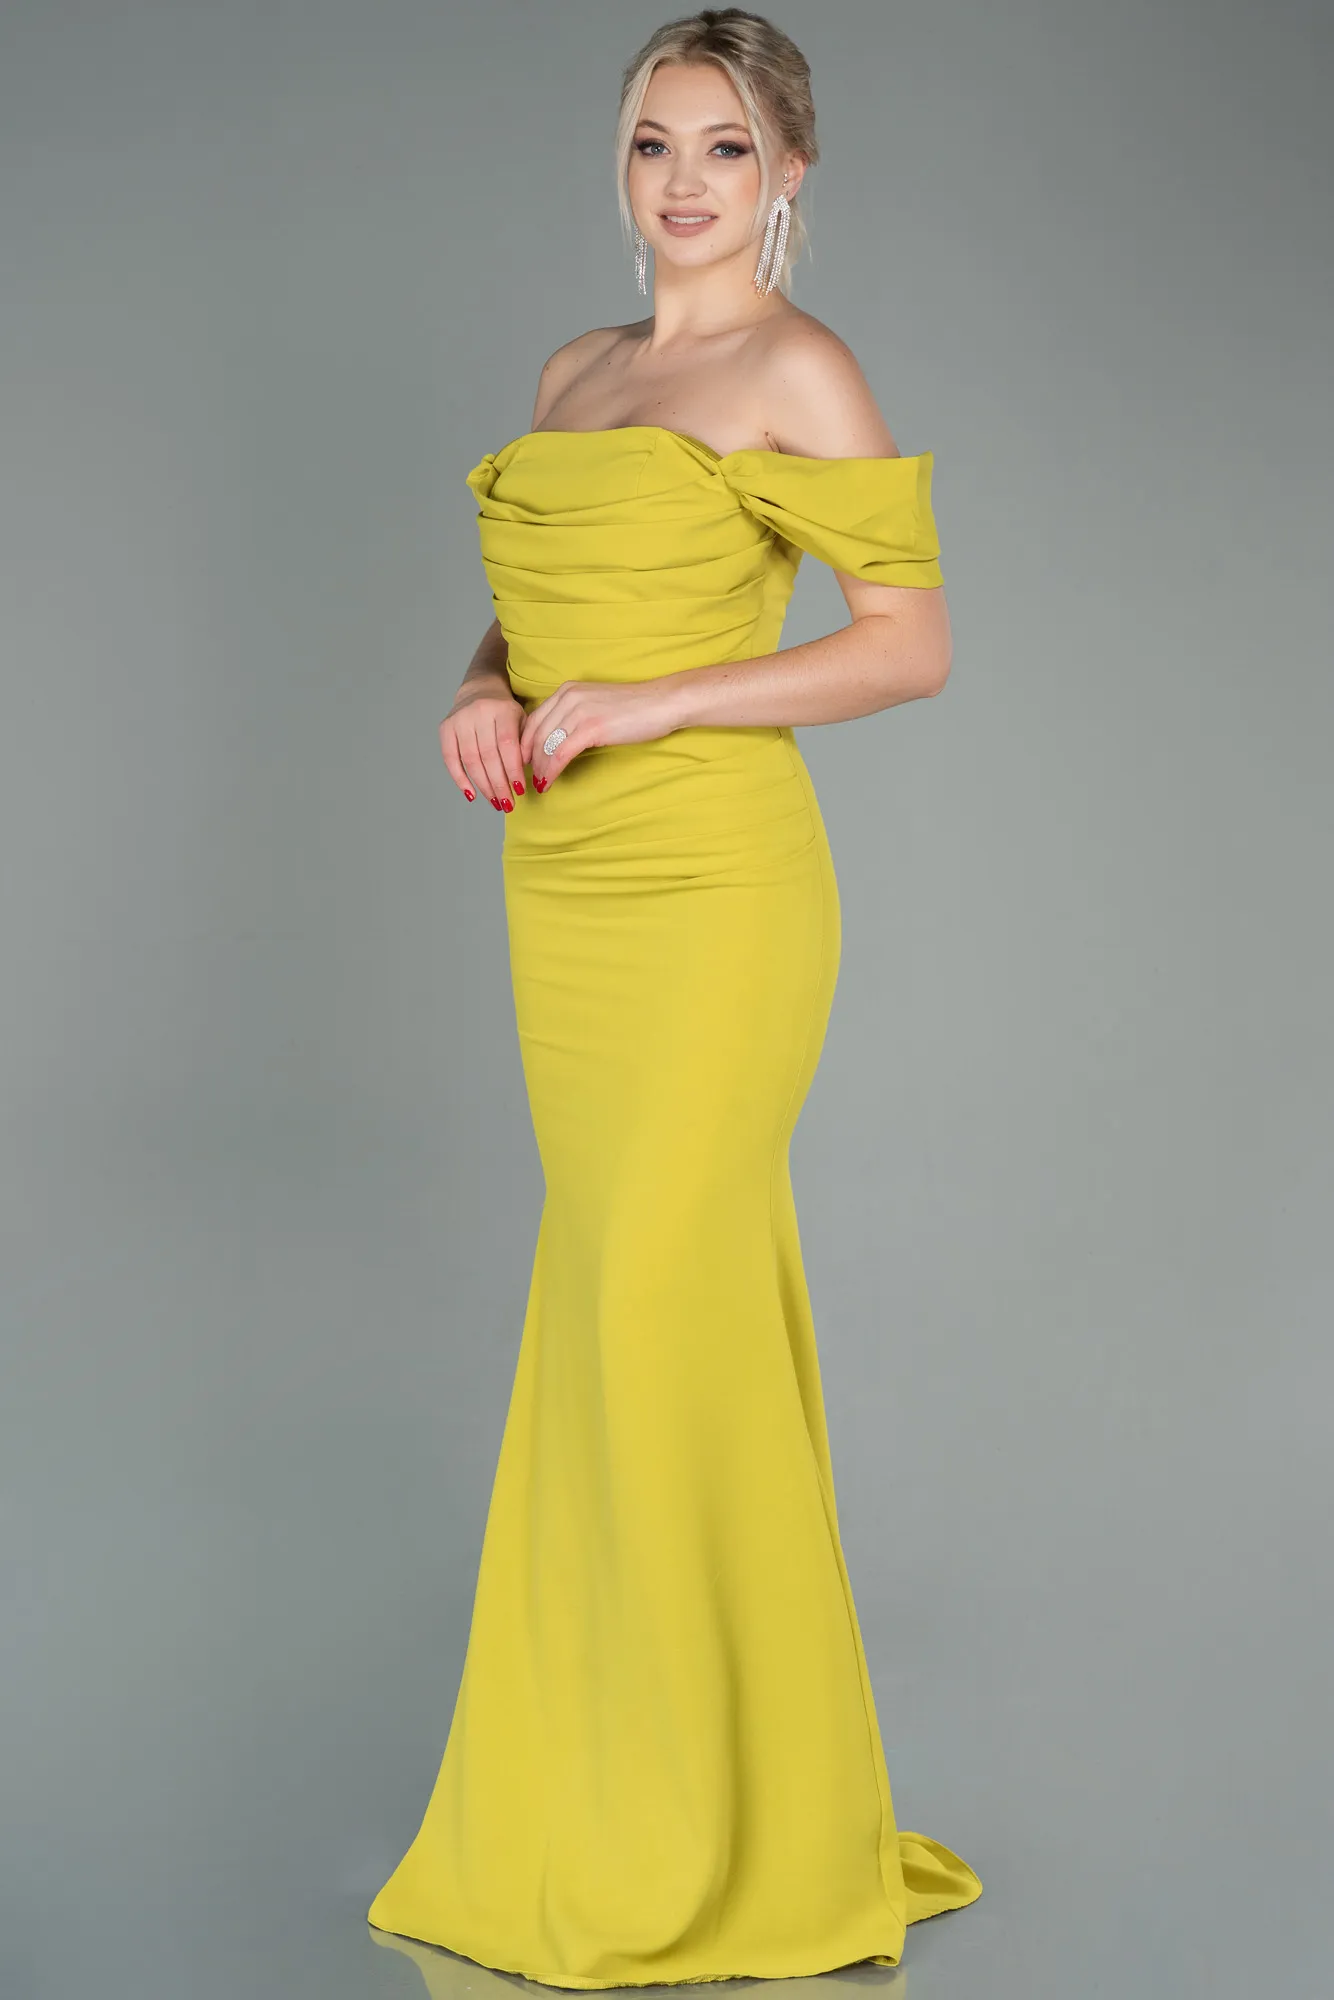 Pistachio Green-Long Prom Gown ABU2783